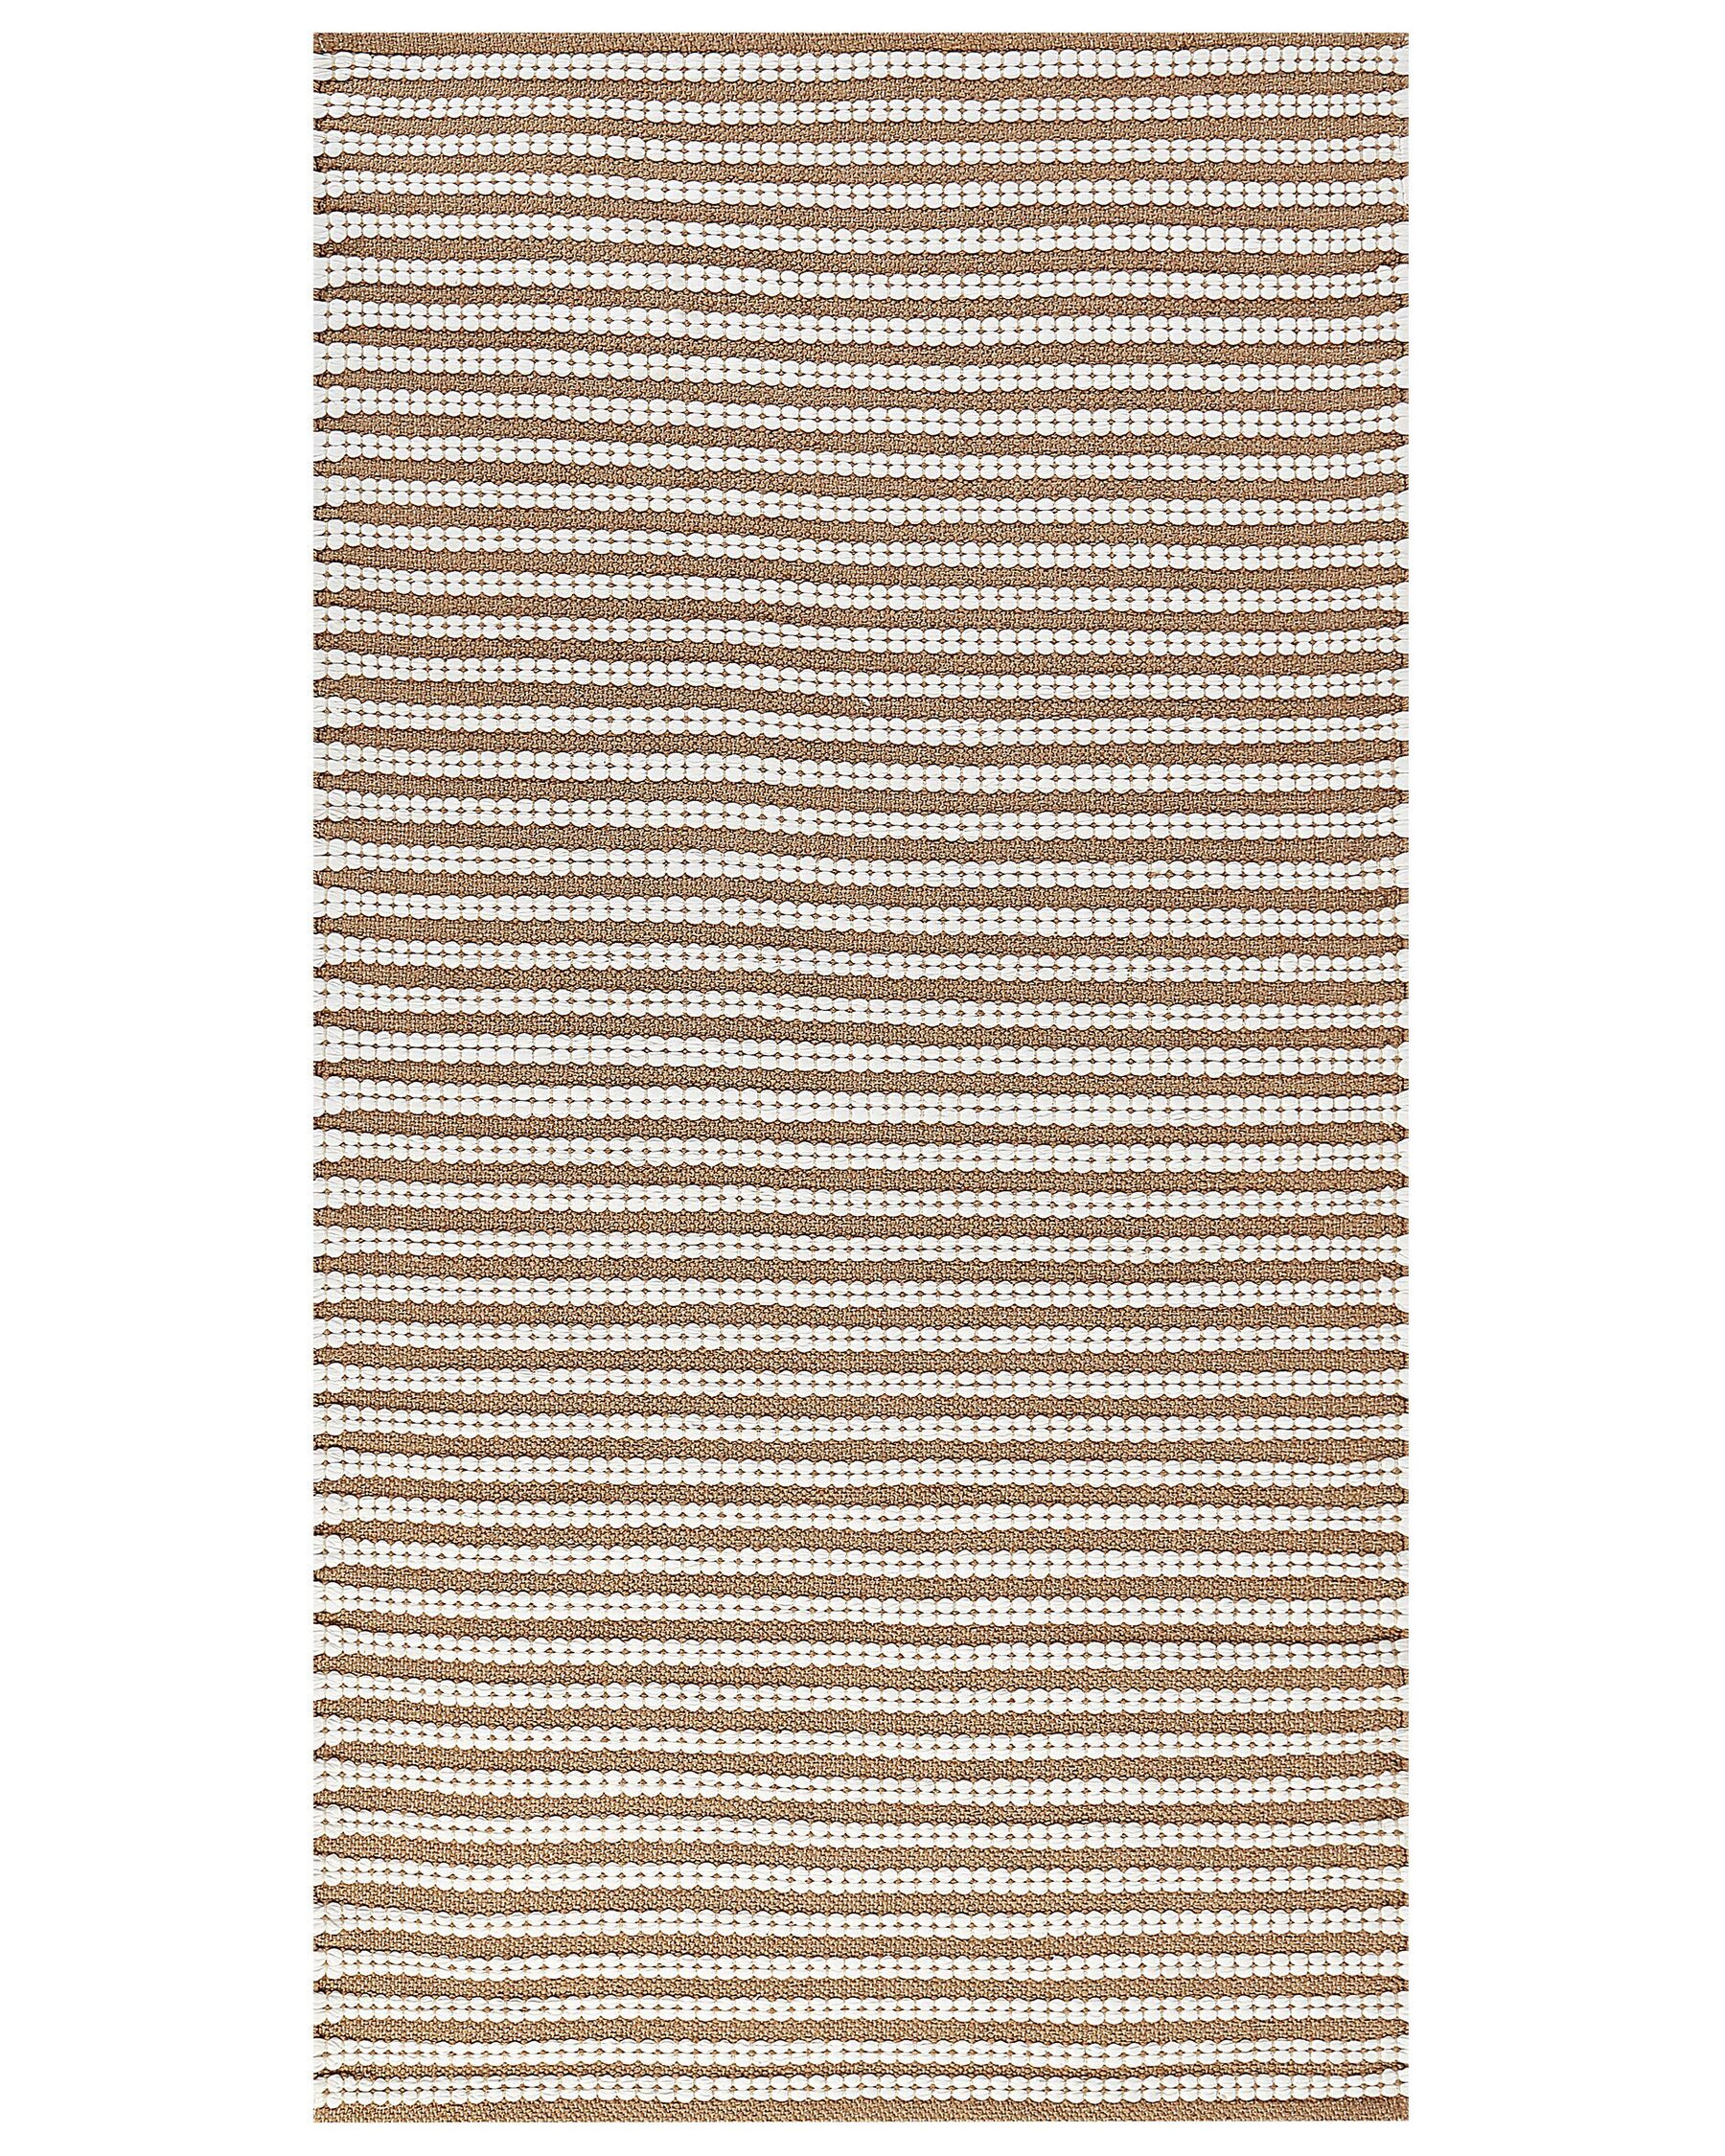 Tapis en coton blanc et marron 80 x 150 cm SOFULU_842835